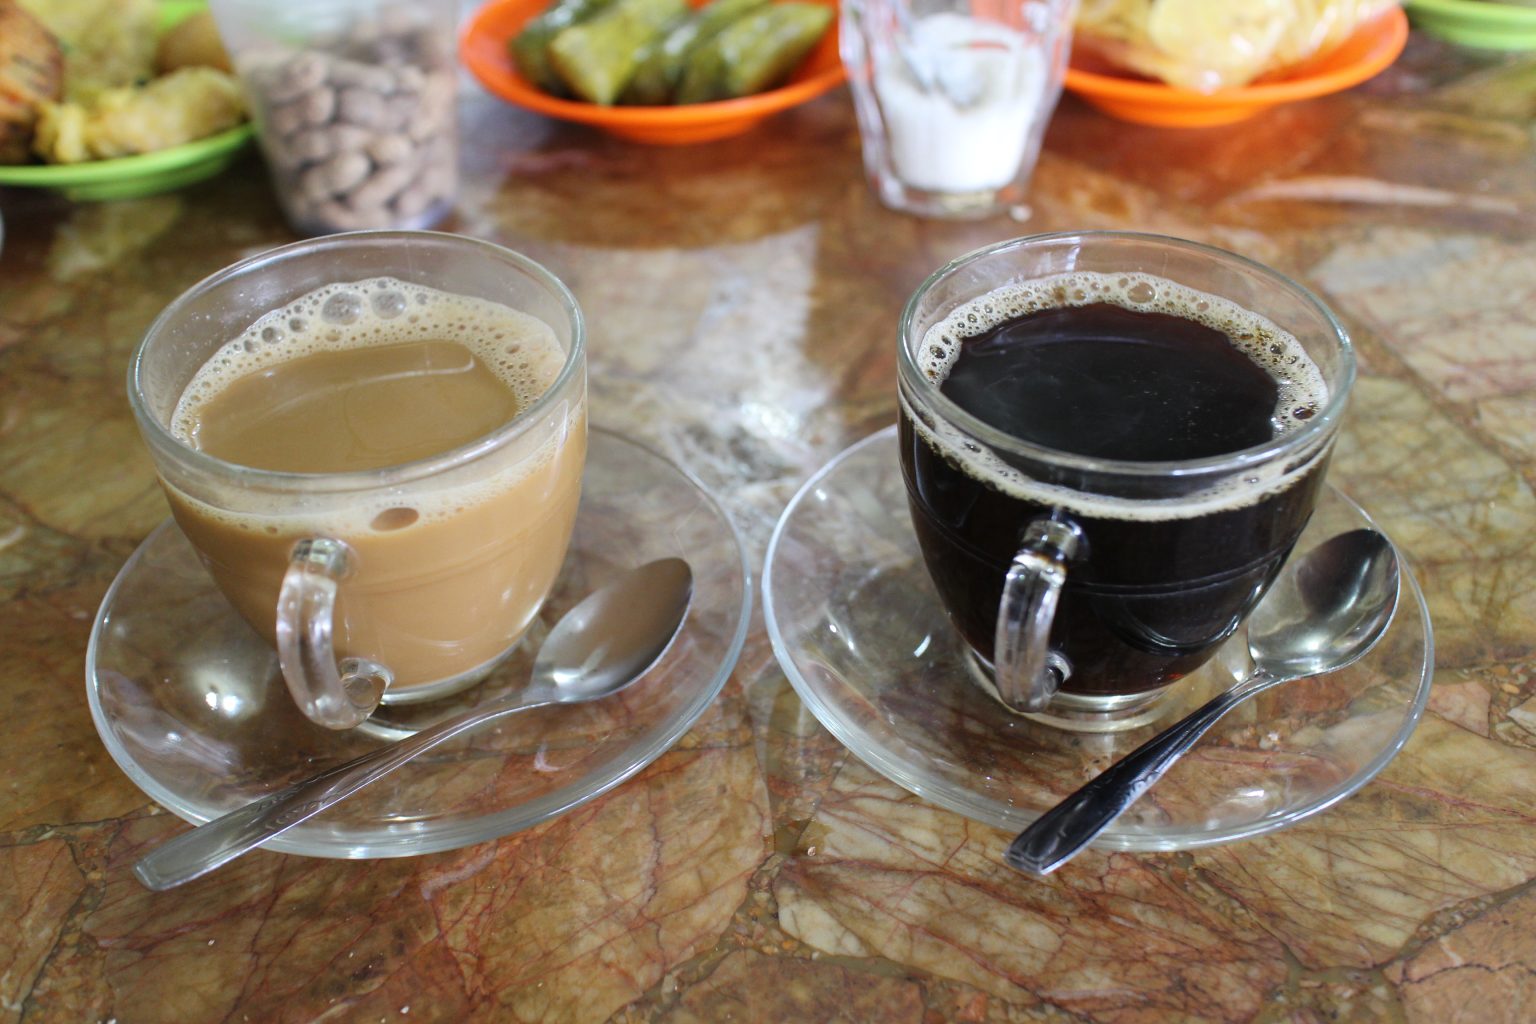 Warung Kopi & juice semangat - Coffee Shop Recommend!